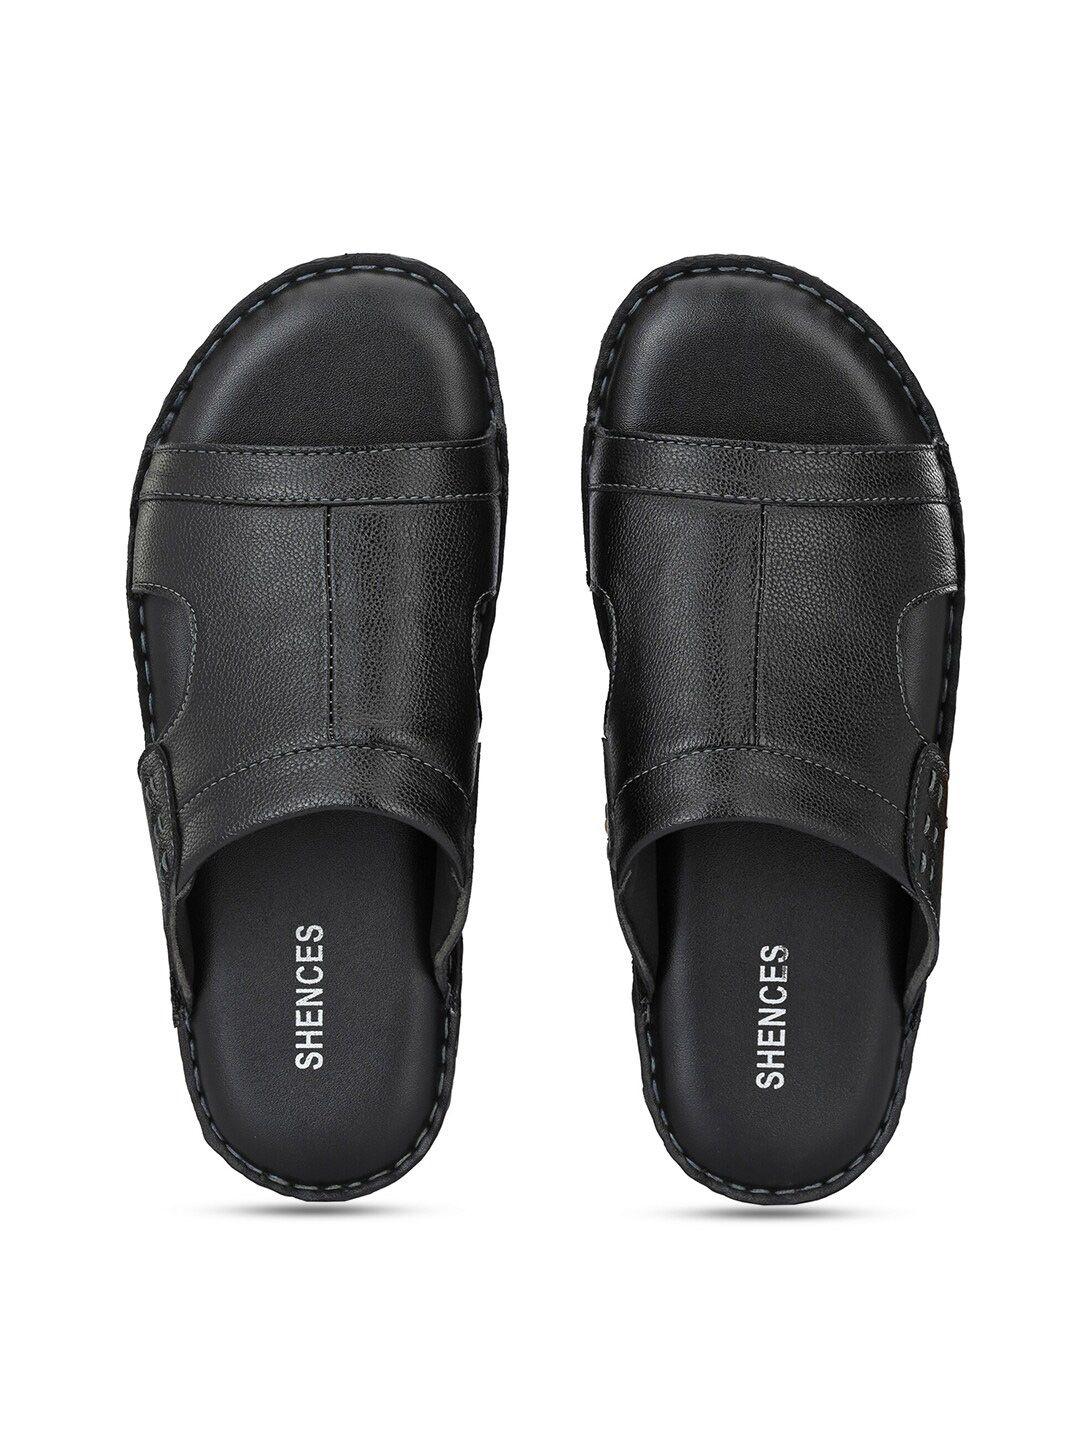 shences-men-comfort-sandals